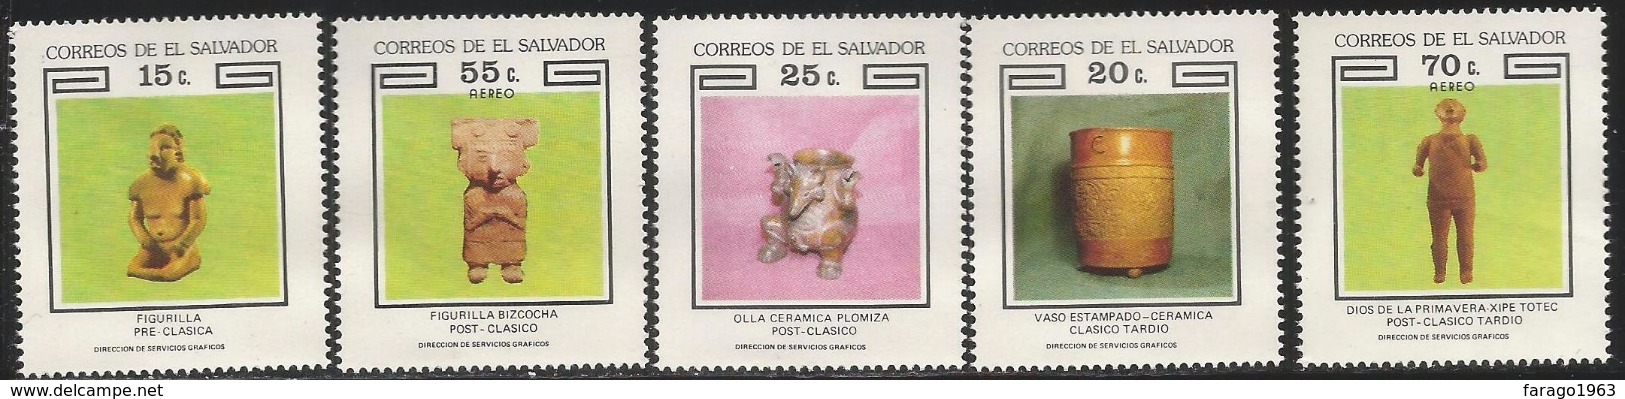 1985 El Salvador Archaeology Pottery Complete Set Of 6 MNH (only 5 Shown I Have 6th) - El Salvador